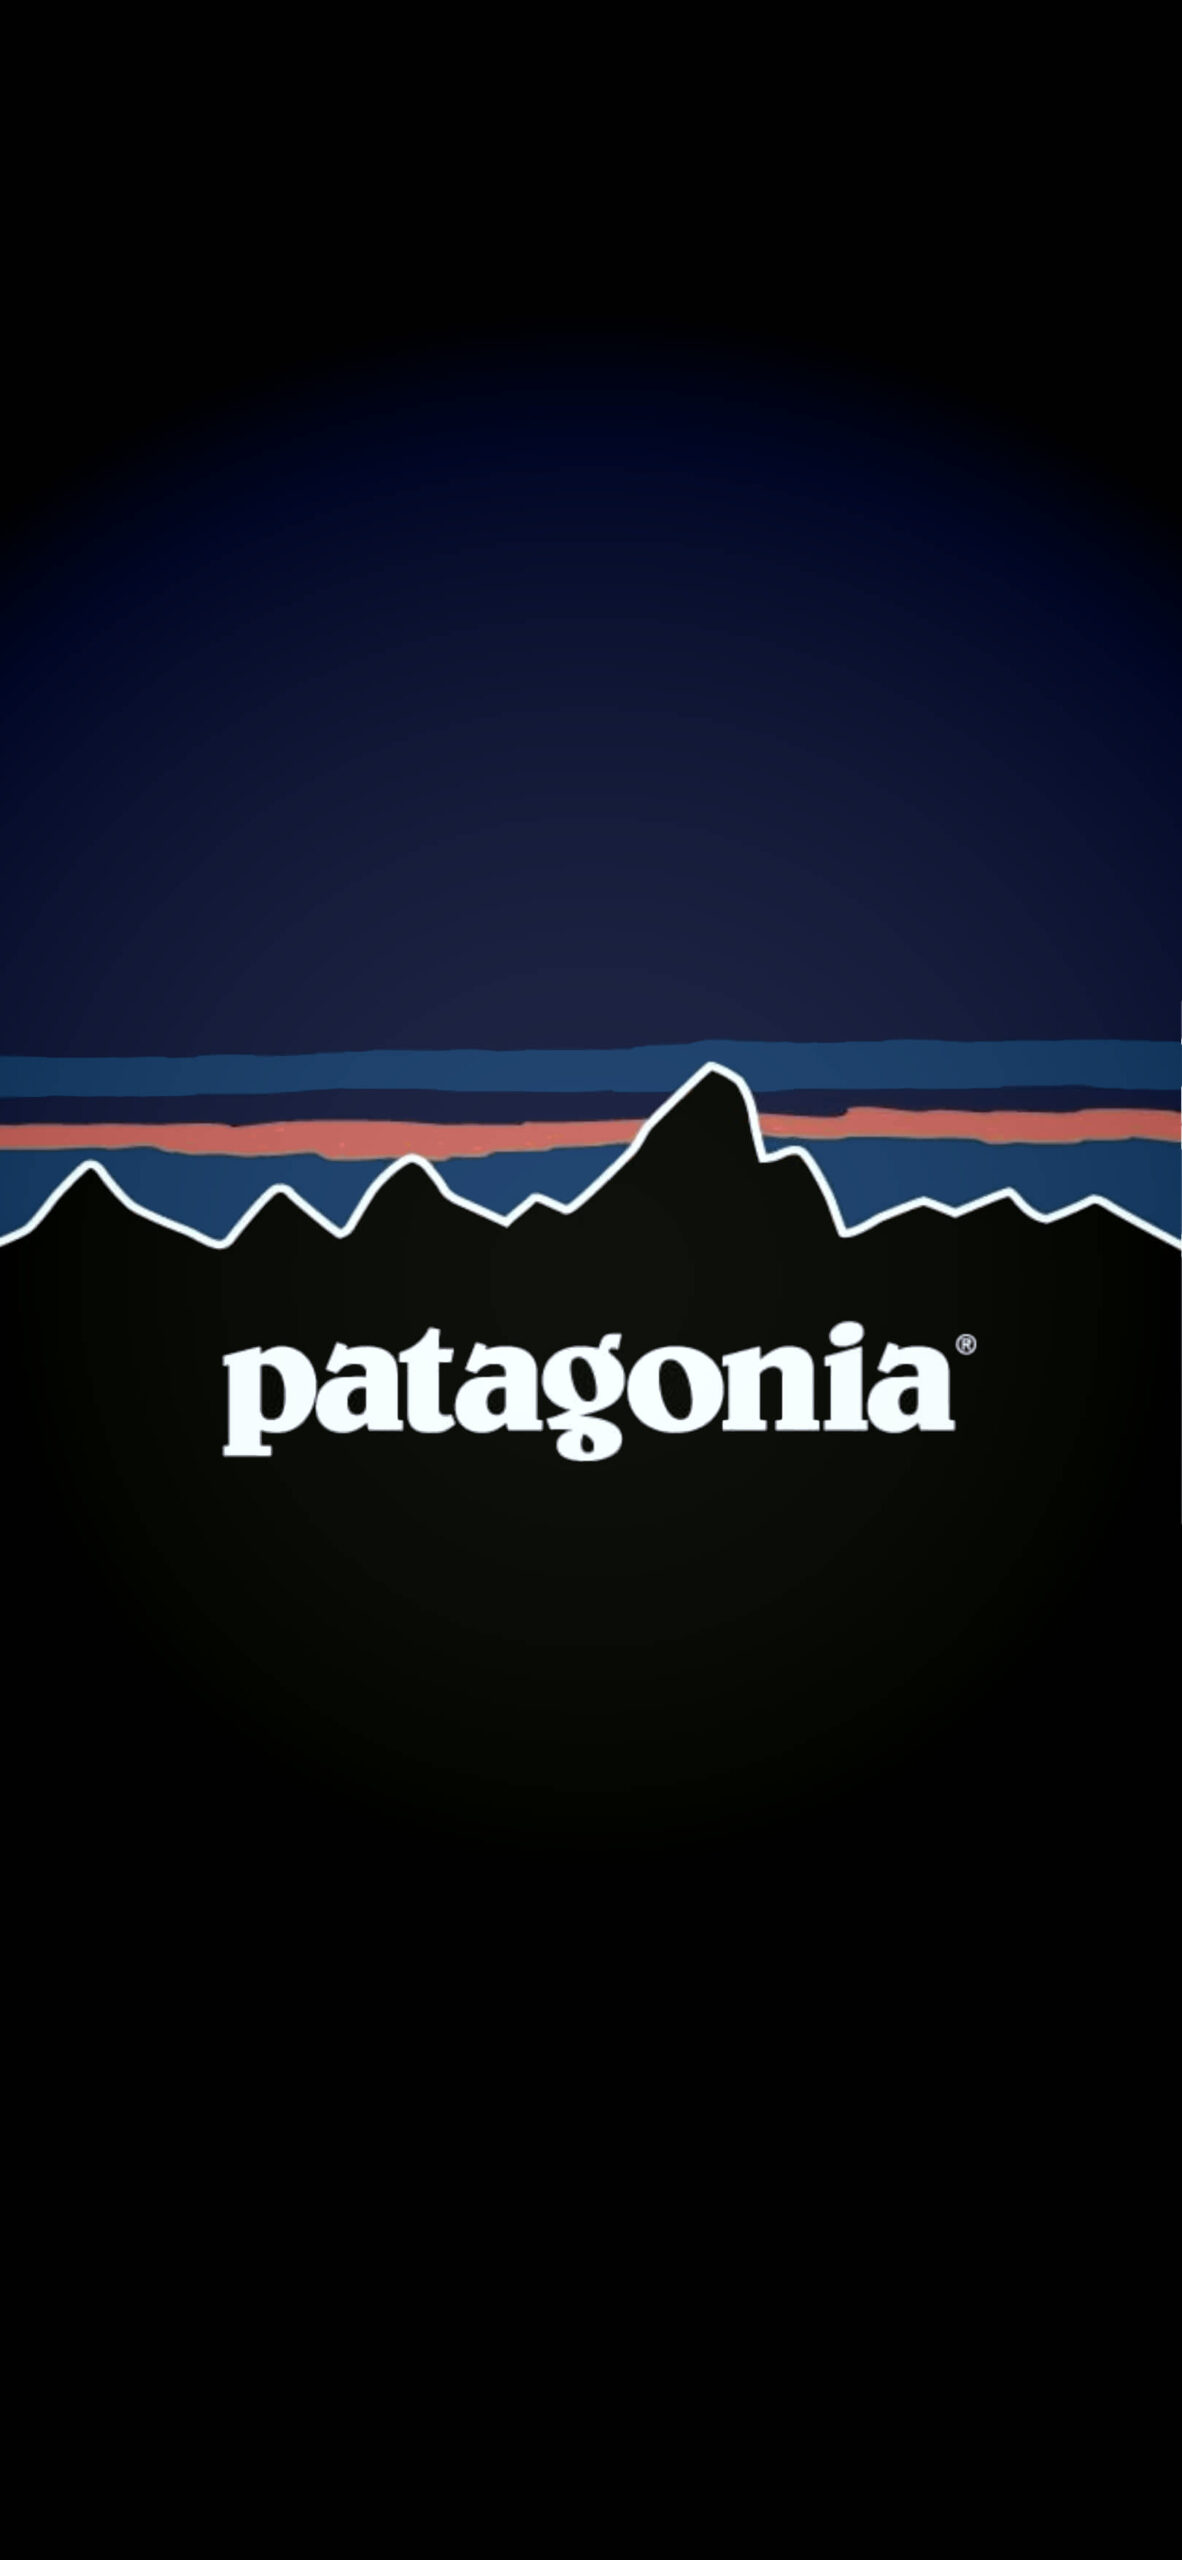 Patagonia パタゴニアの無料高画質スマホ壁紙 エモい スマホ壁紙辞典